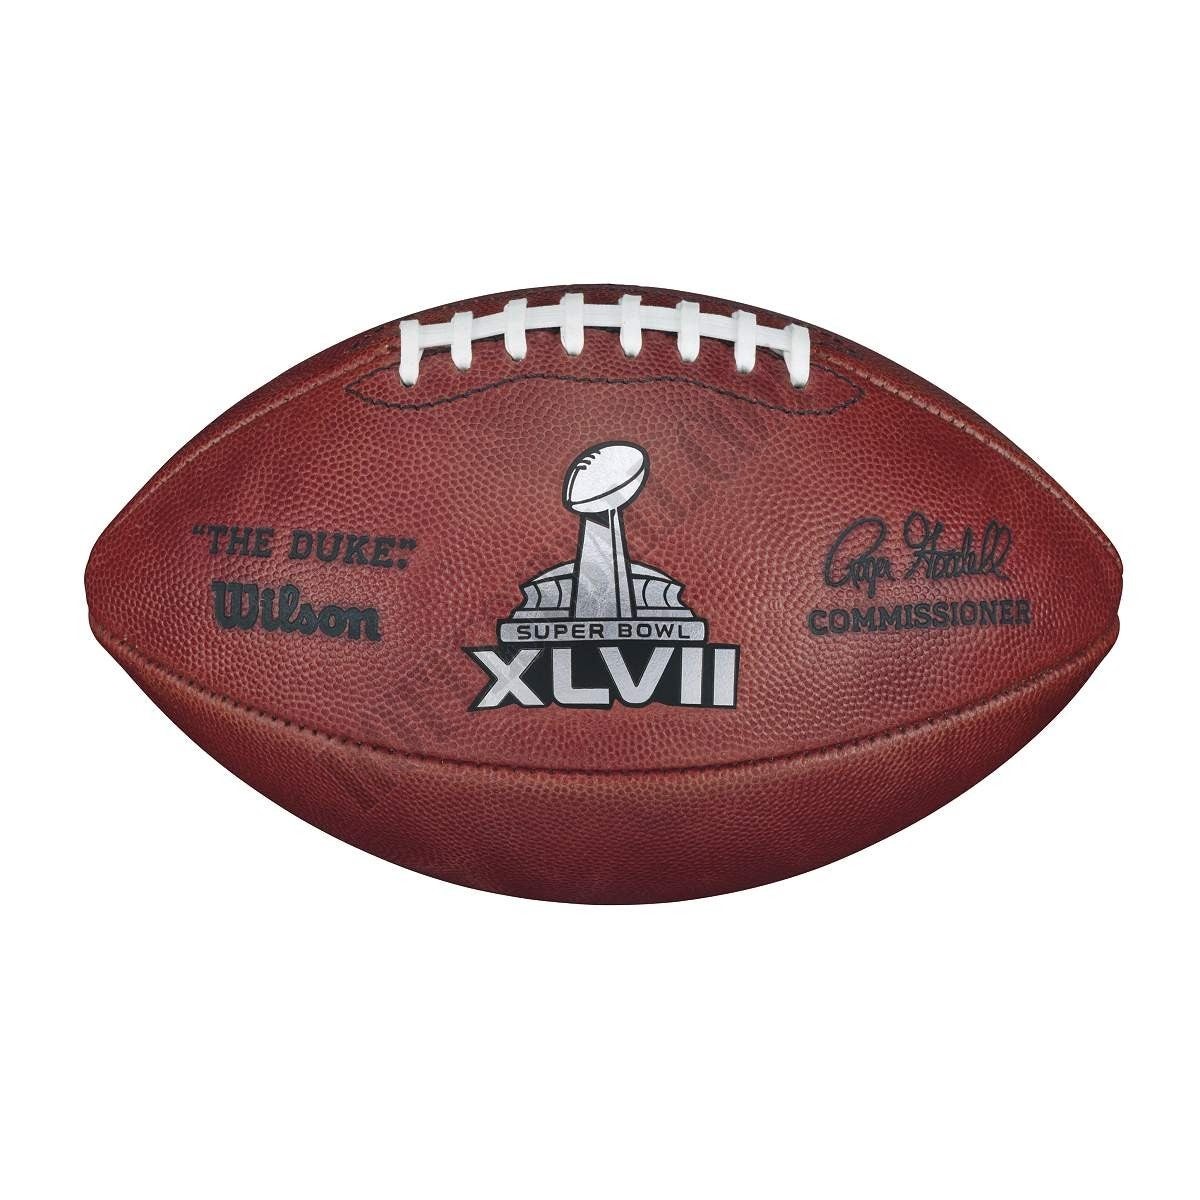 Super Bowl XLVII Game Football - Baltimore Ravens ● Wilson Promotions - Super Bowl XLVII Game Football - Baltimore Ravens ● Wilson Promotions